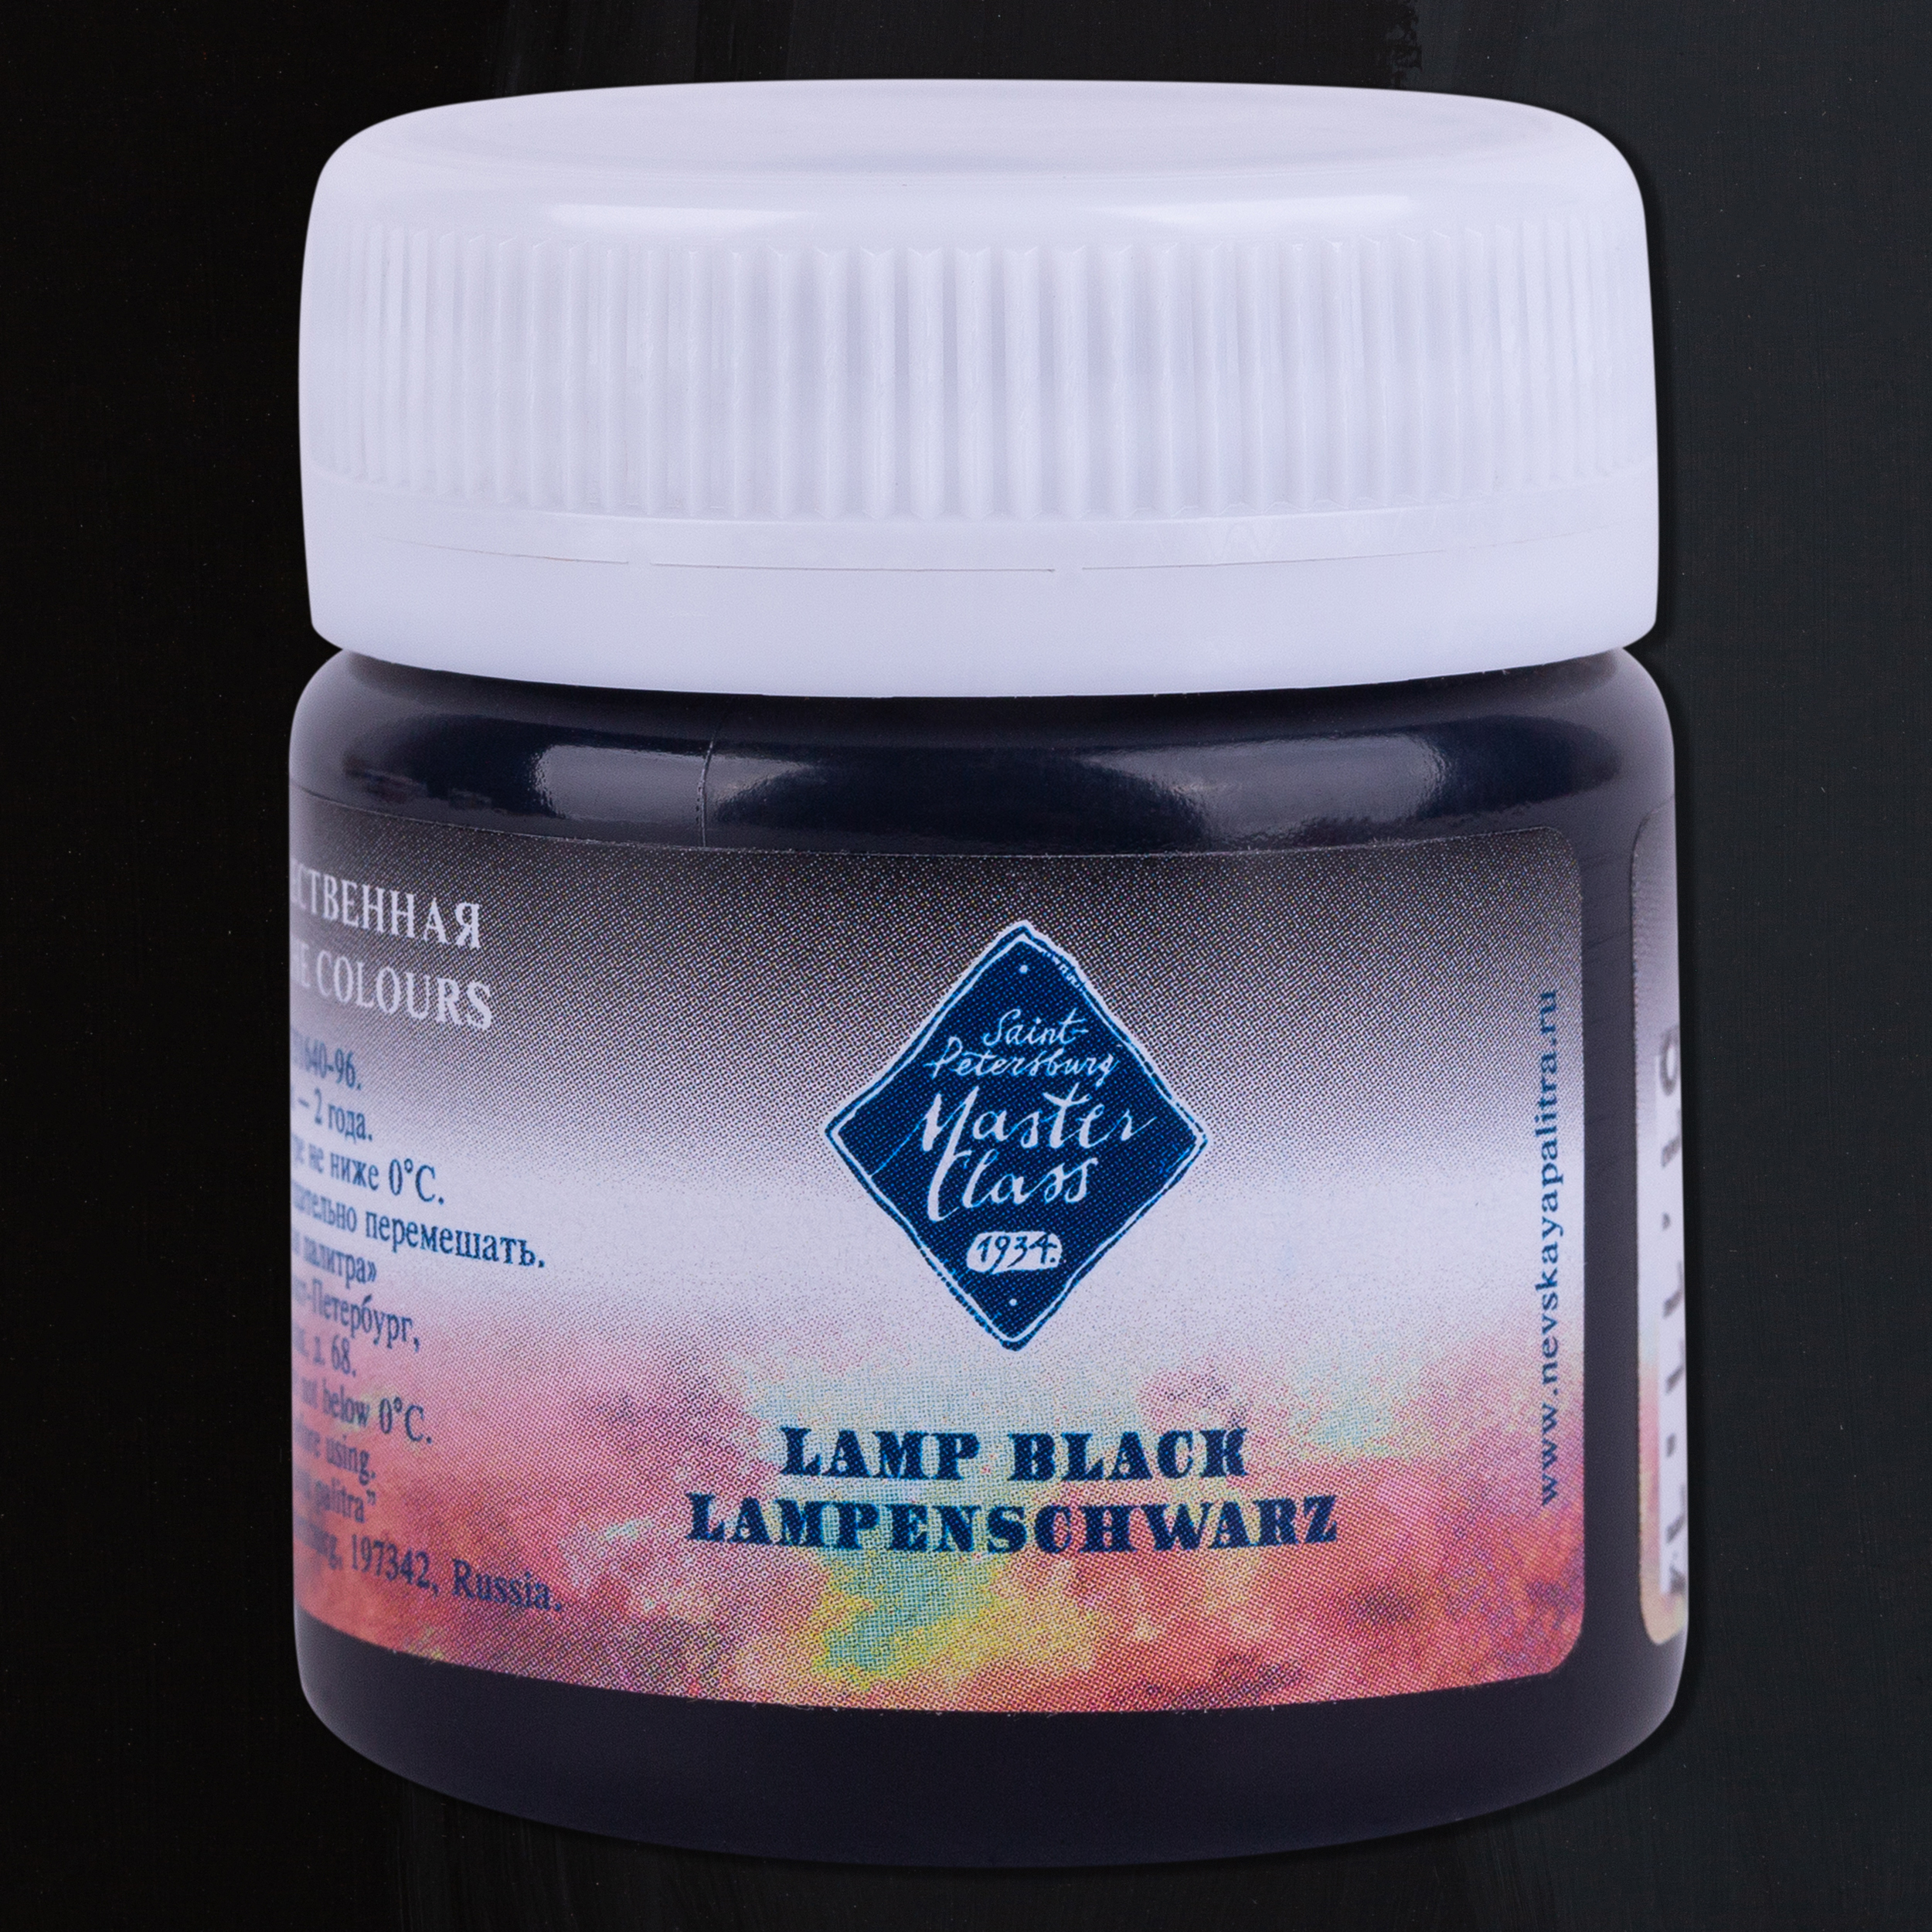 Lamp black "Master Class" in the jar. № 801